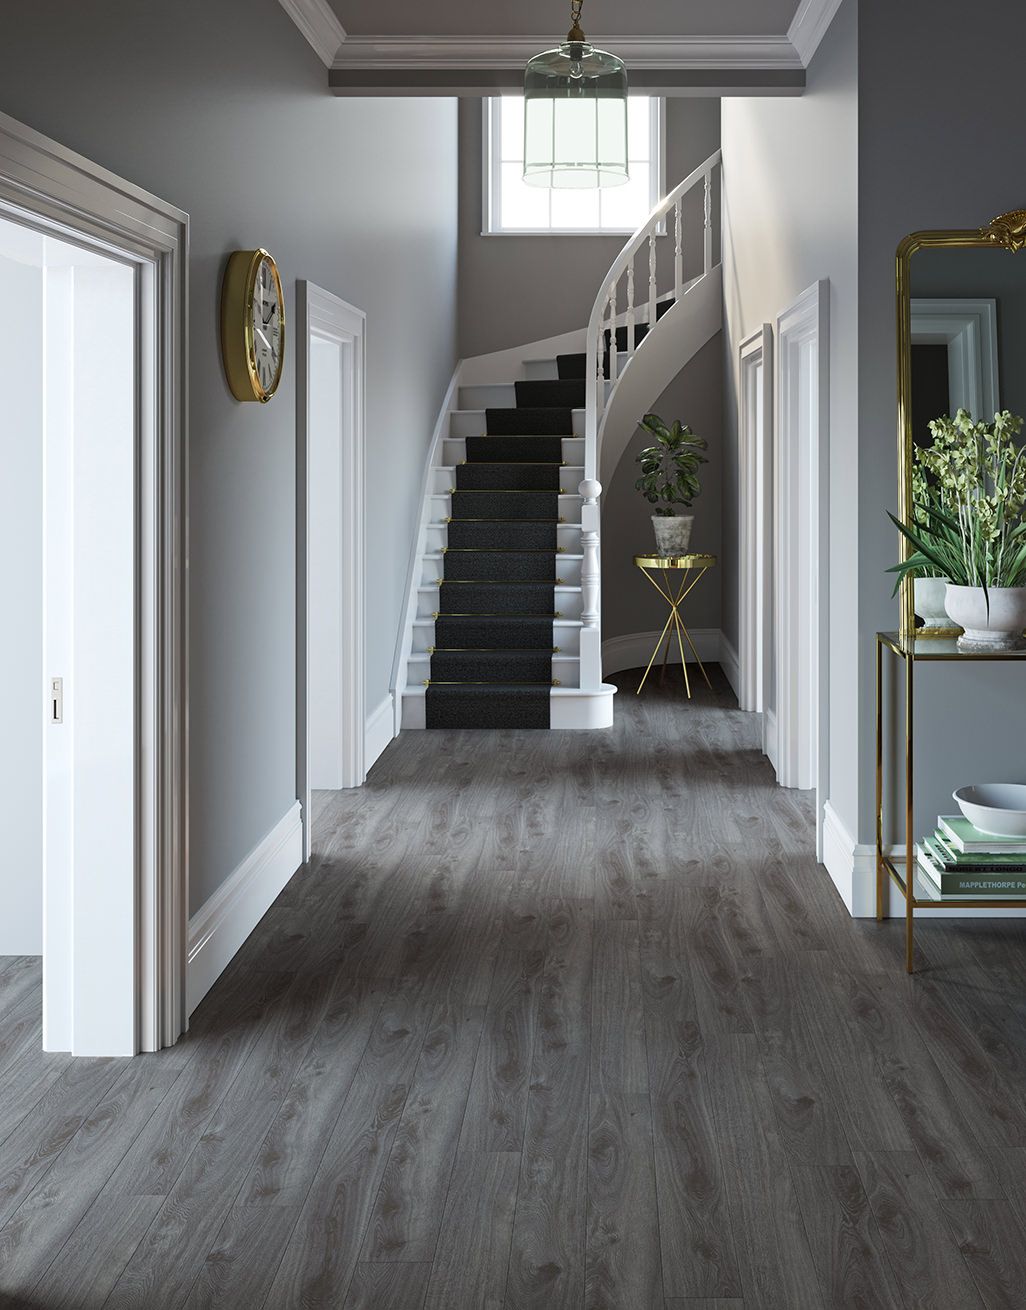 Prestige Grey Oak Laminate Flooring, Images Of Laminate Flooring In Hallways